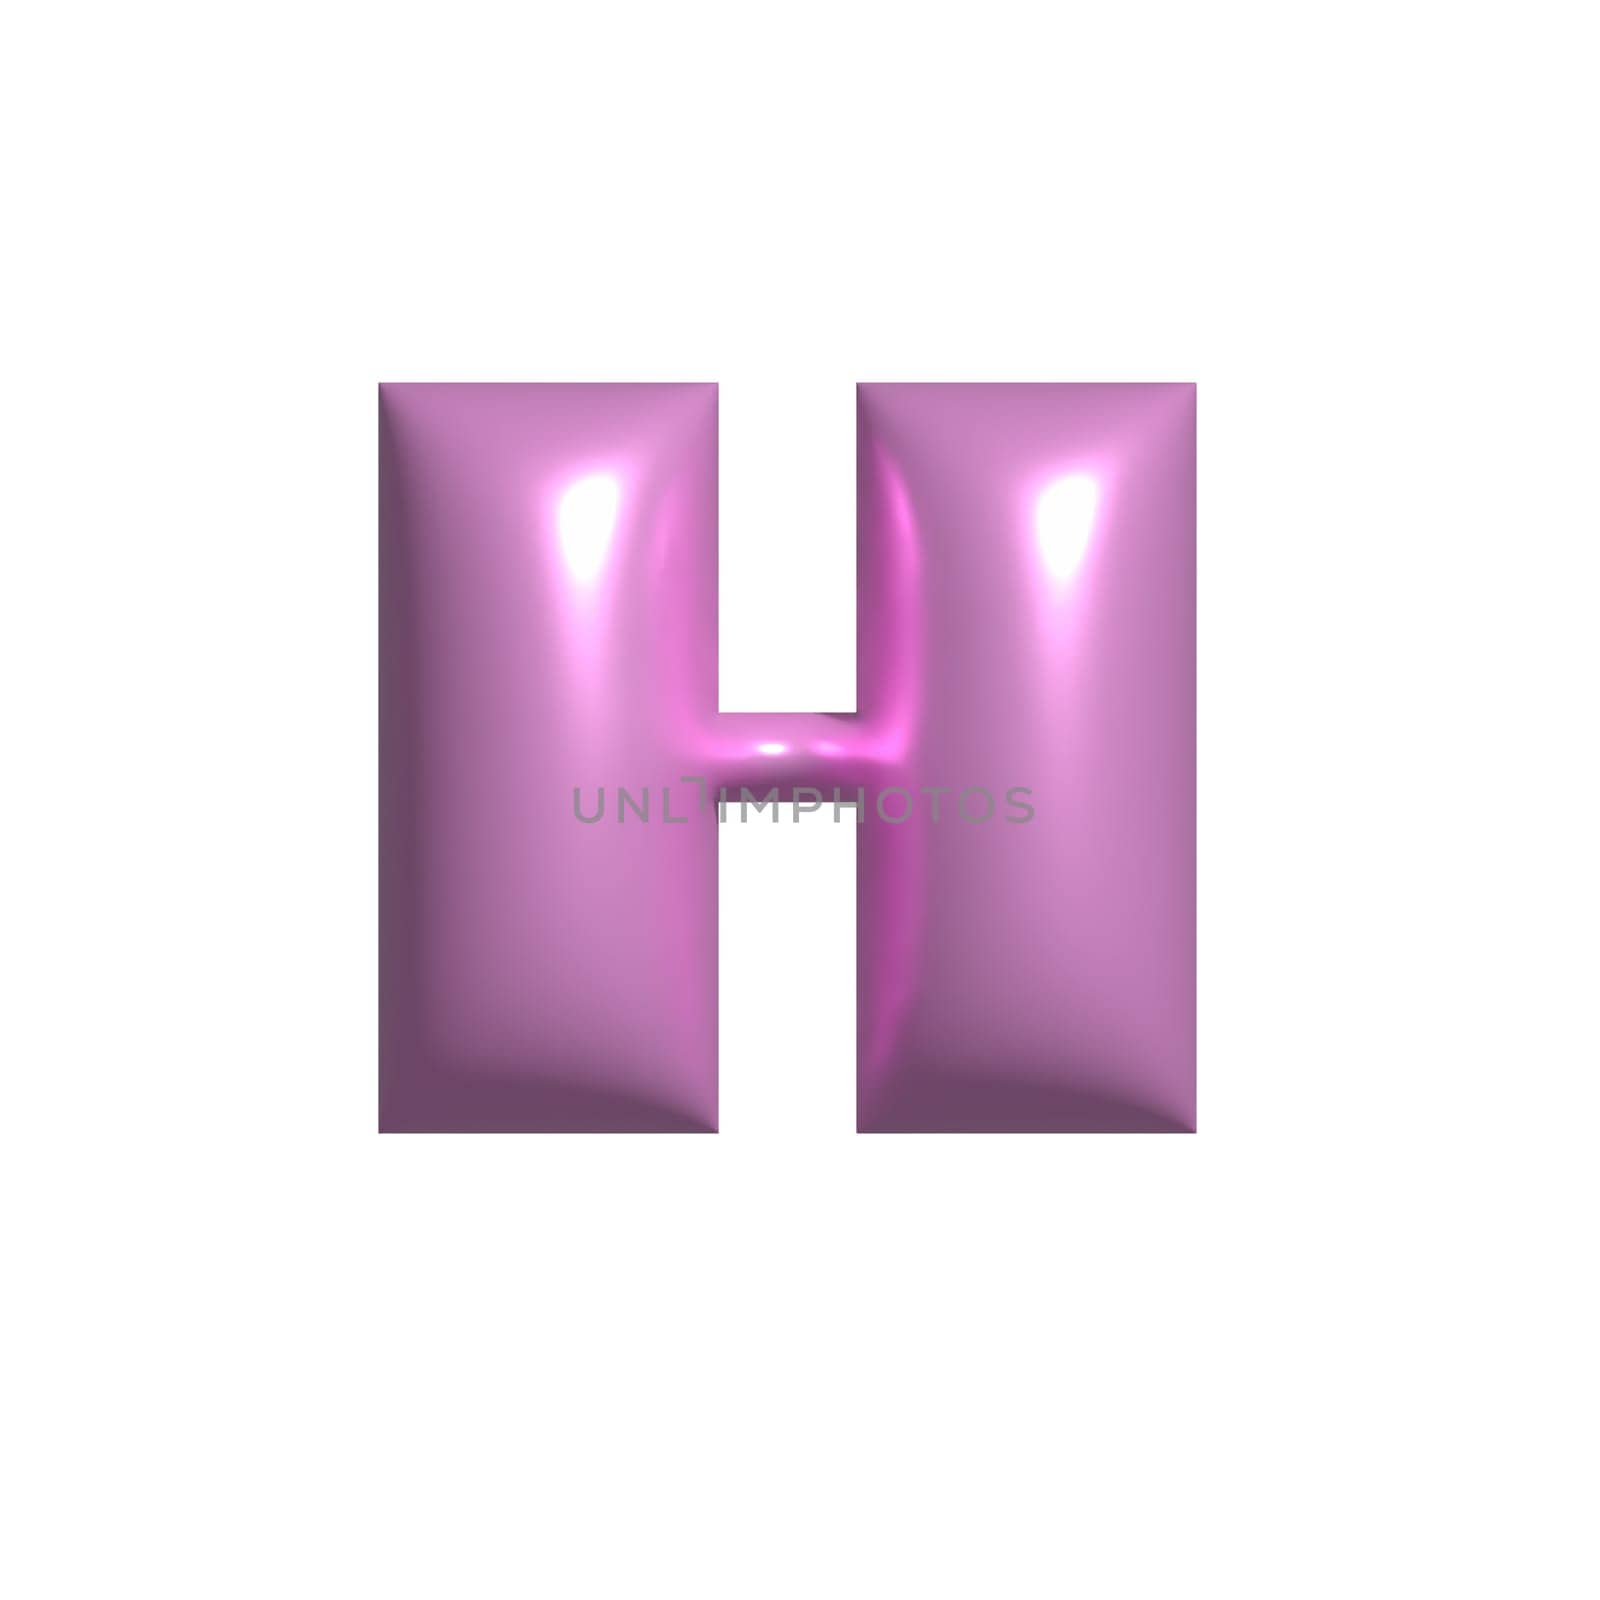 Pink shiny reflective letter H 3D illustration by Dustick